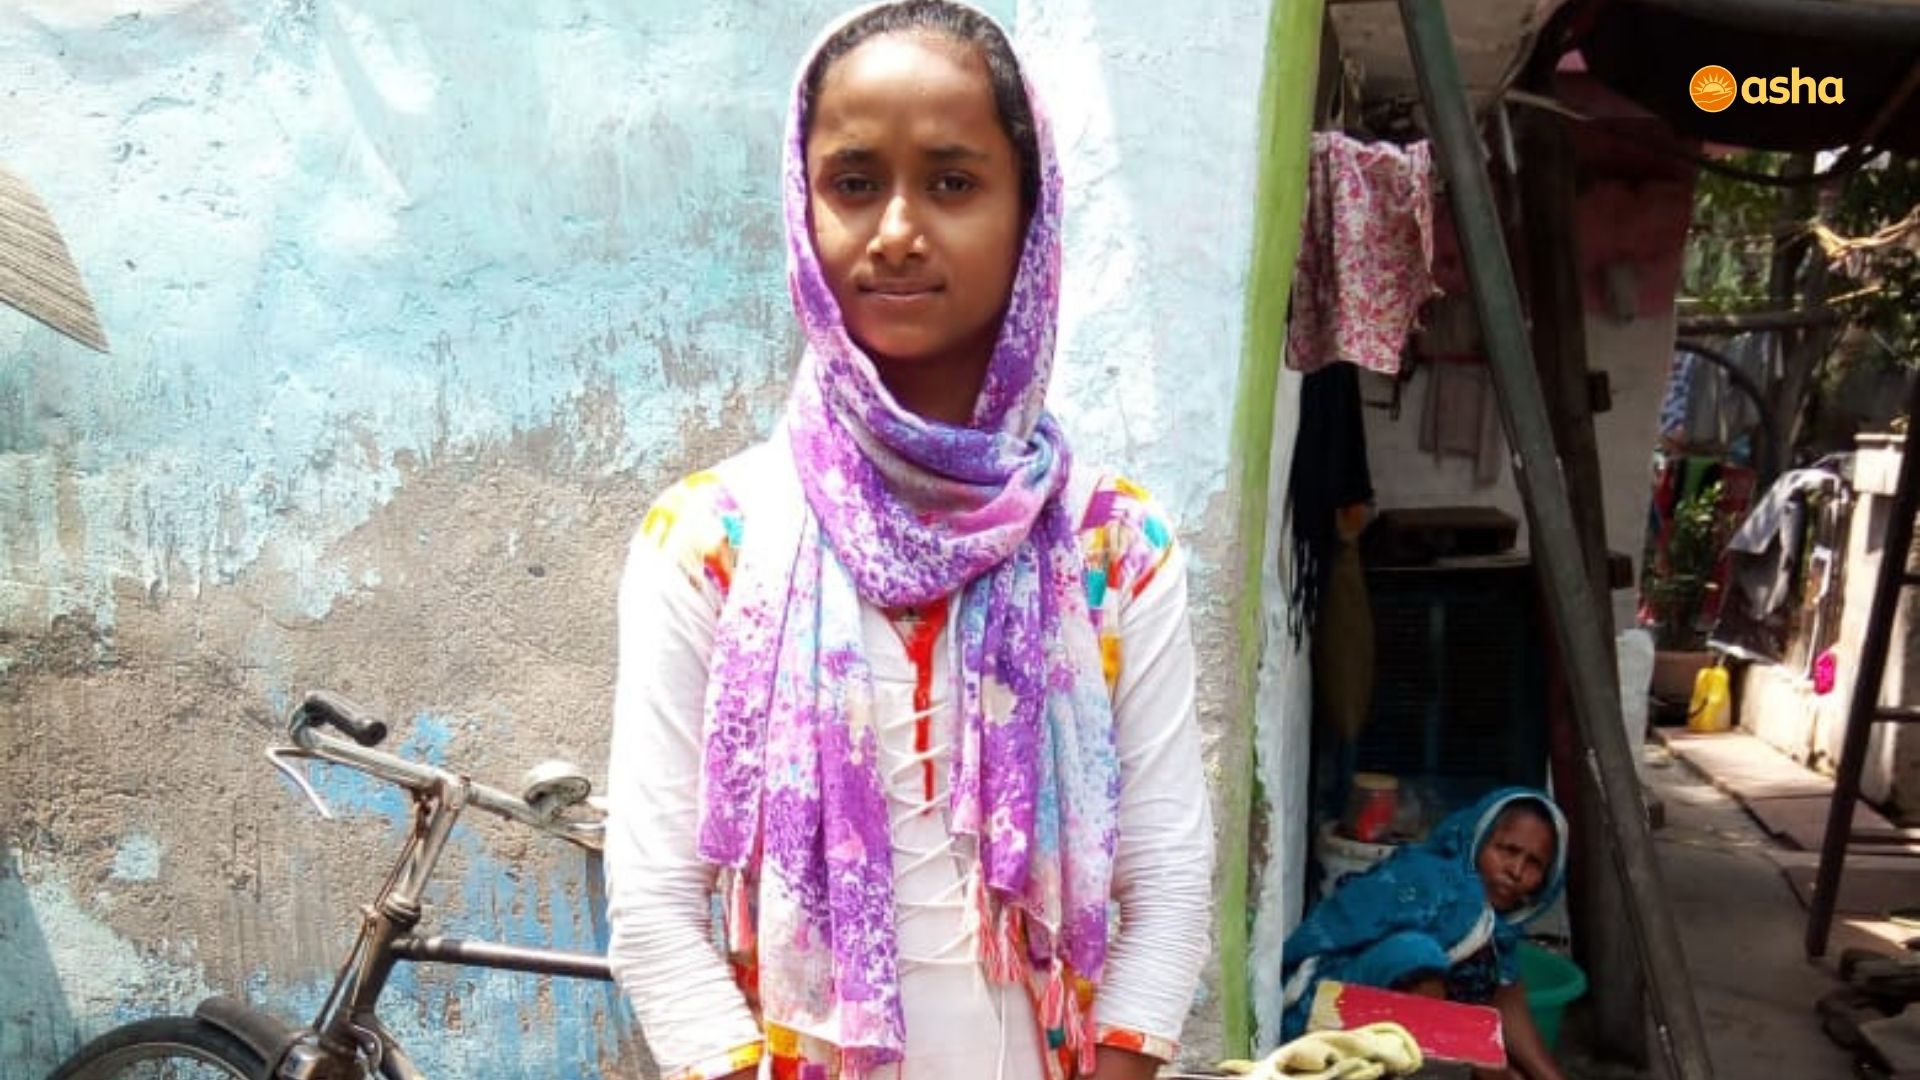 Mehjabeen in front of her shanty in Janta Camp (near Asha's Anna Nagar slum community)